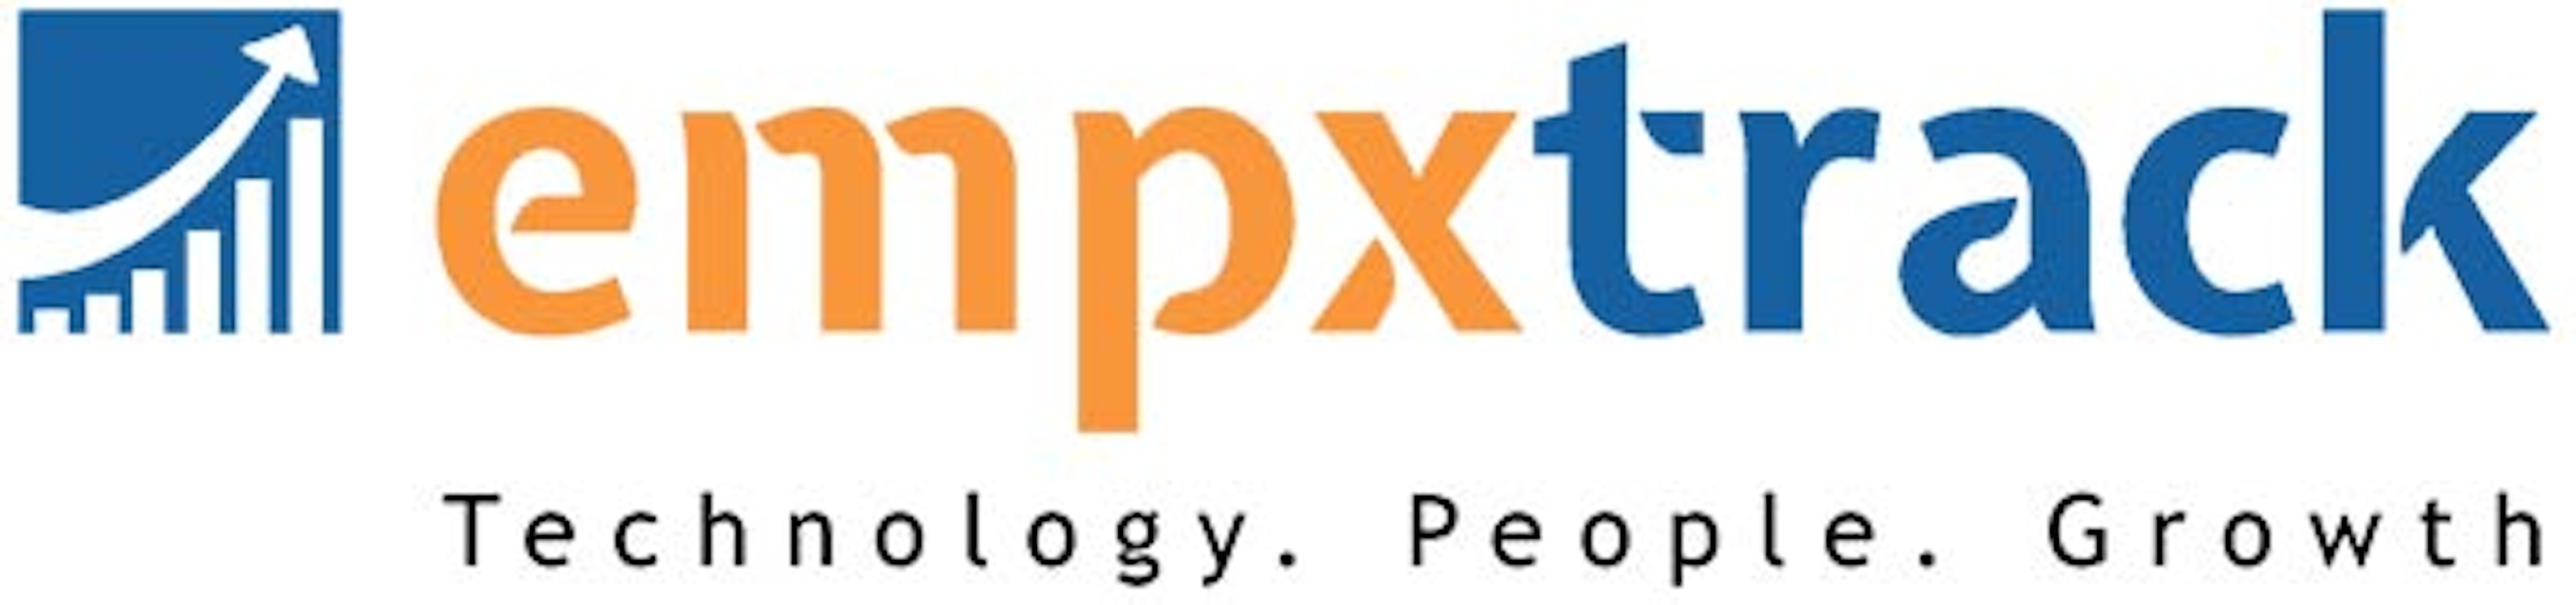 Empxtrack 360 Degree Feedback Logo